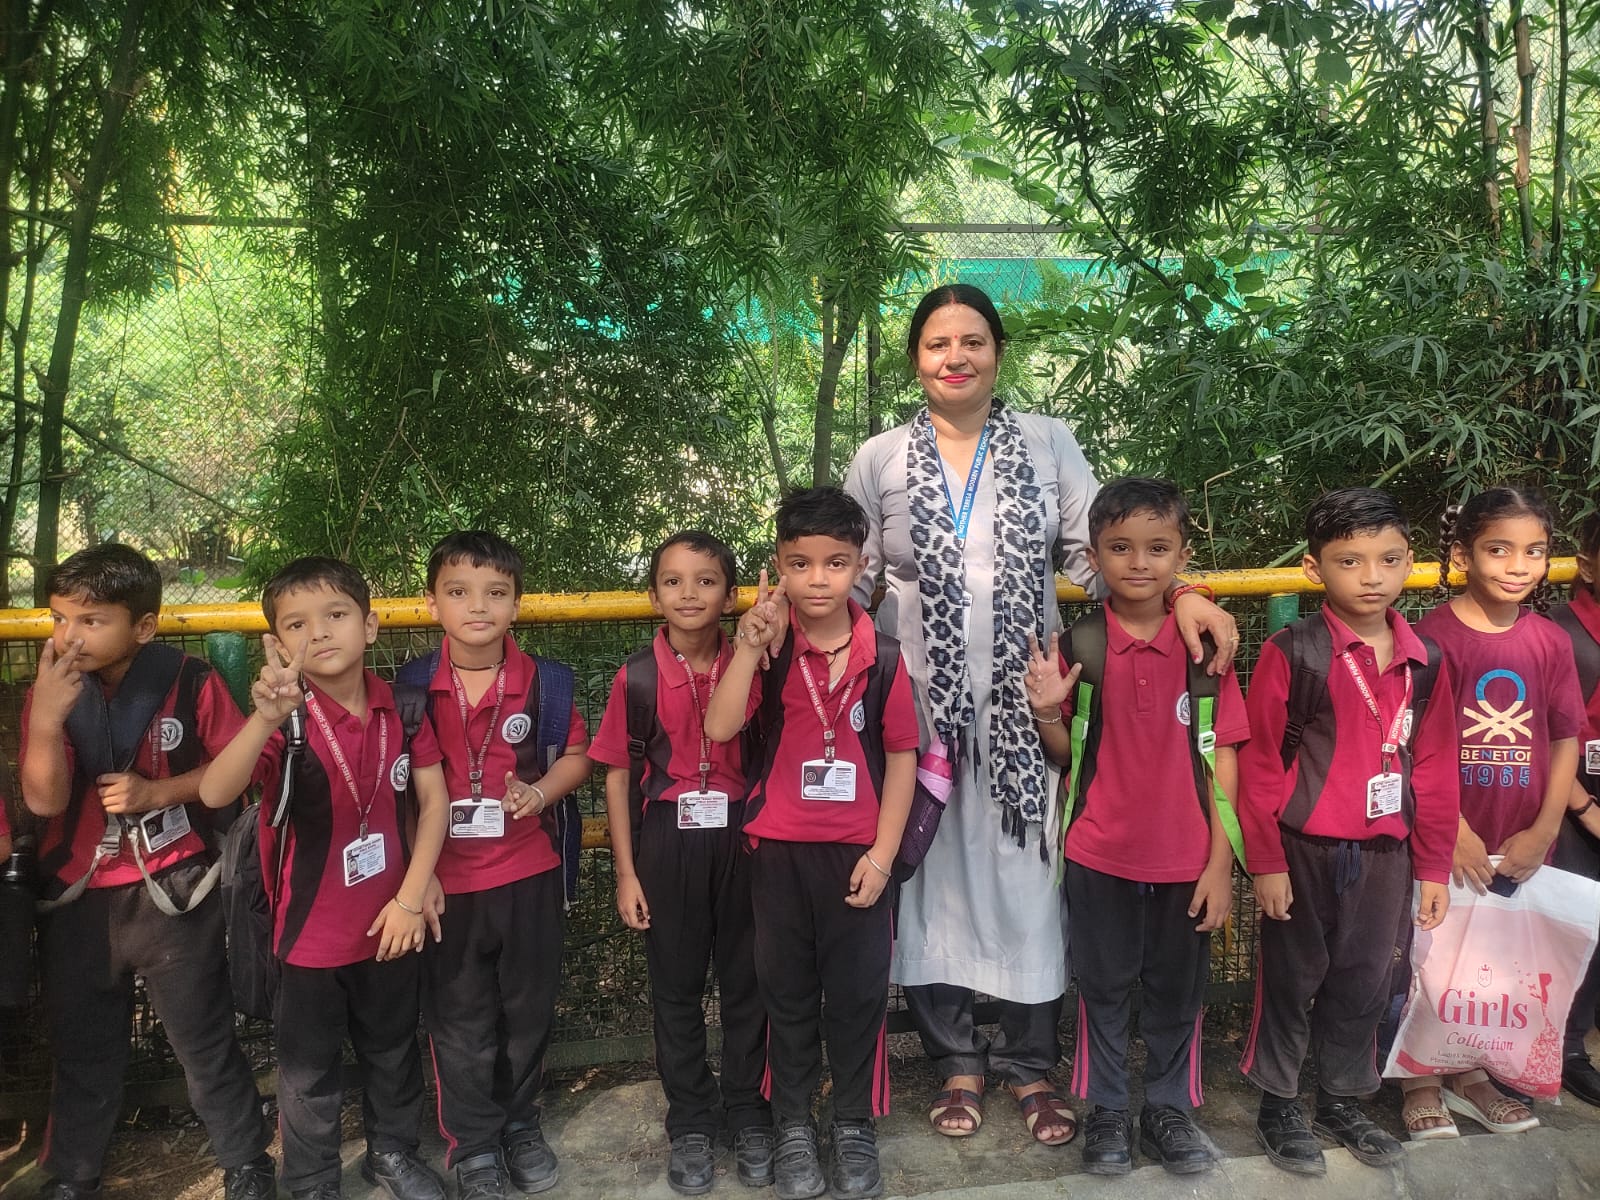 Mother Teresa Modern Public School Kurukshetra - FIELD TRIP - 26-09-2023